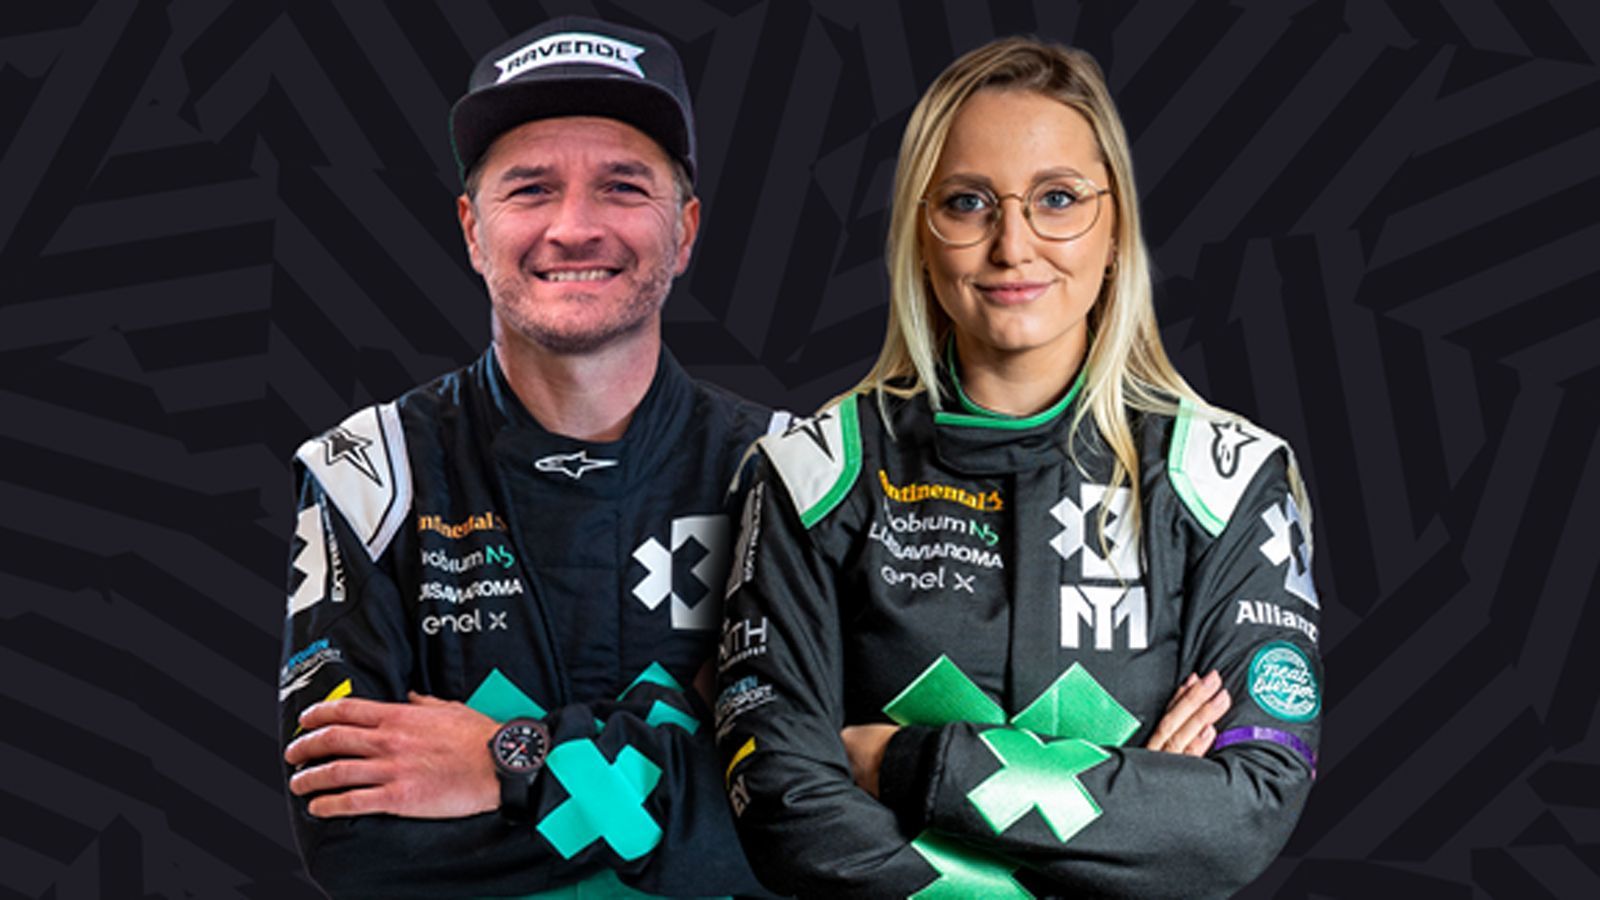 
                <strong>XITE Energy Racing</strong><br>
                &#x2022; Fahrer: Tamara Molinaro (ITA) u. Timo Scheider (GER) -<br>&#x2022; Team aus: Spanien<br>
              